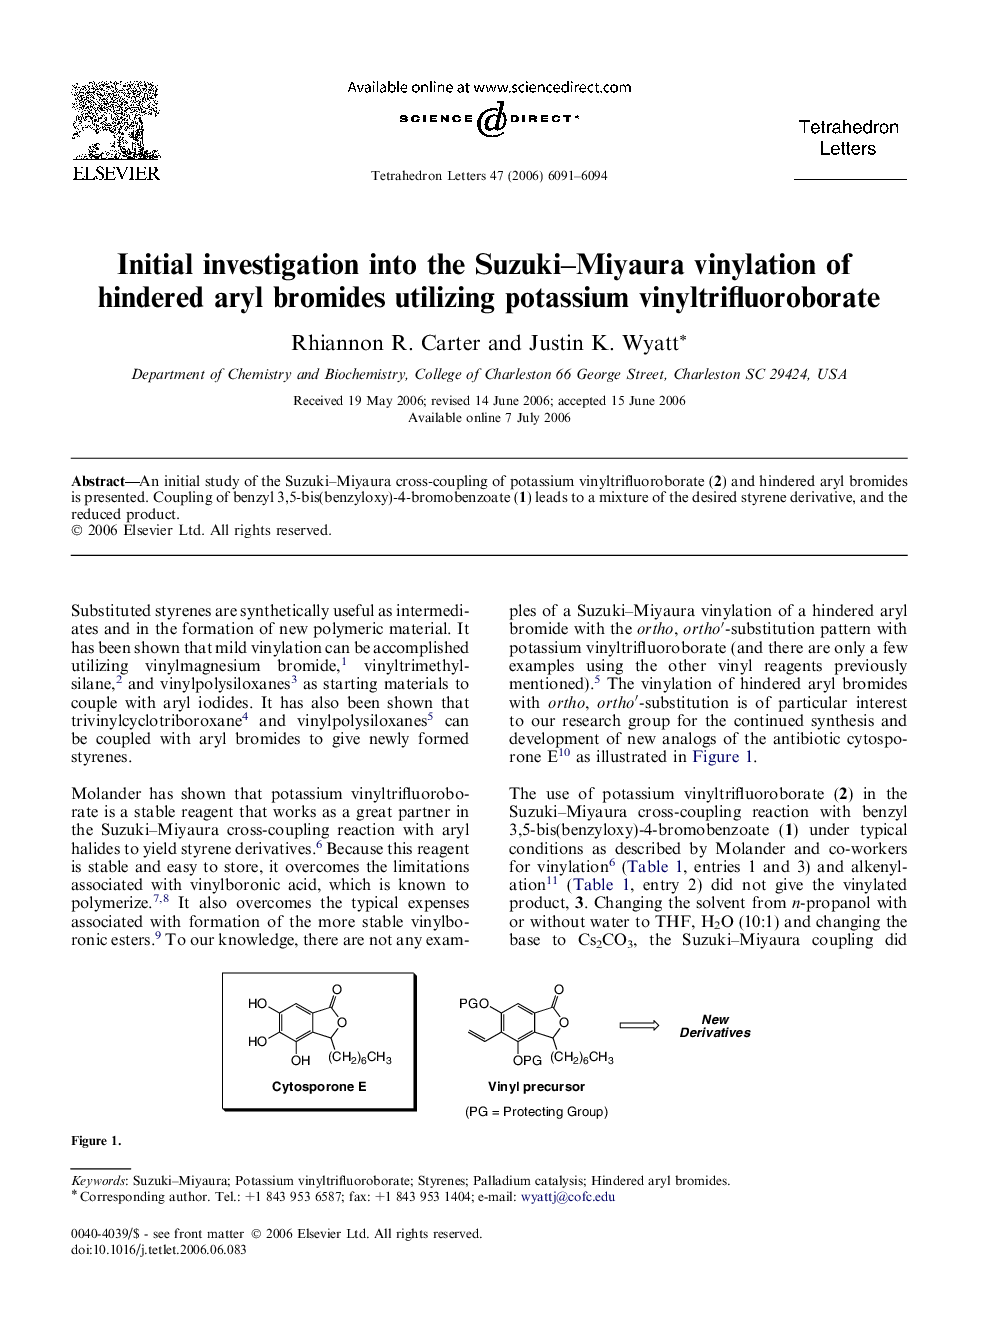 Initial investigation into the Suzuki-Miyaura vinylation of hindered aryl bromides utilizing potassium vinyltrifluoroborate